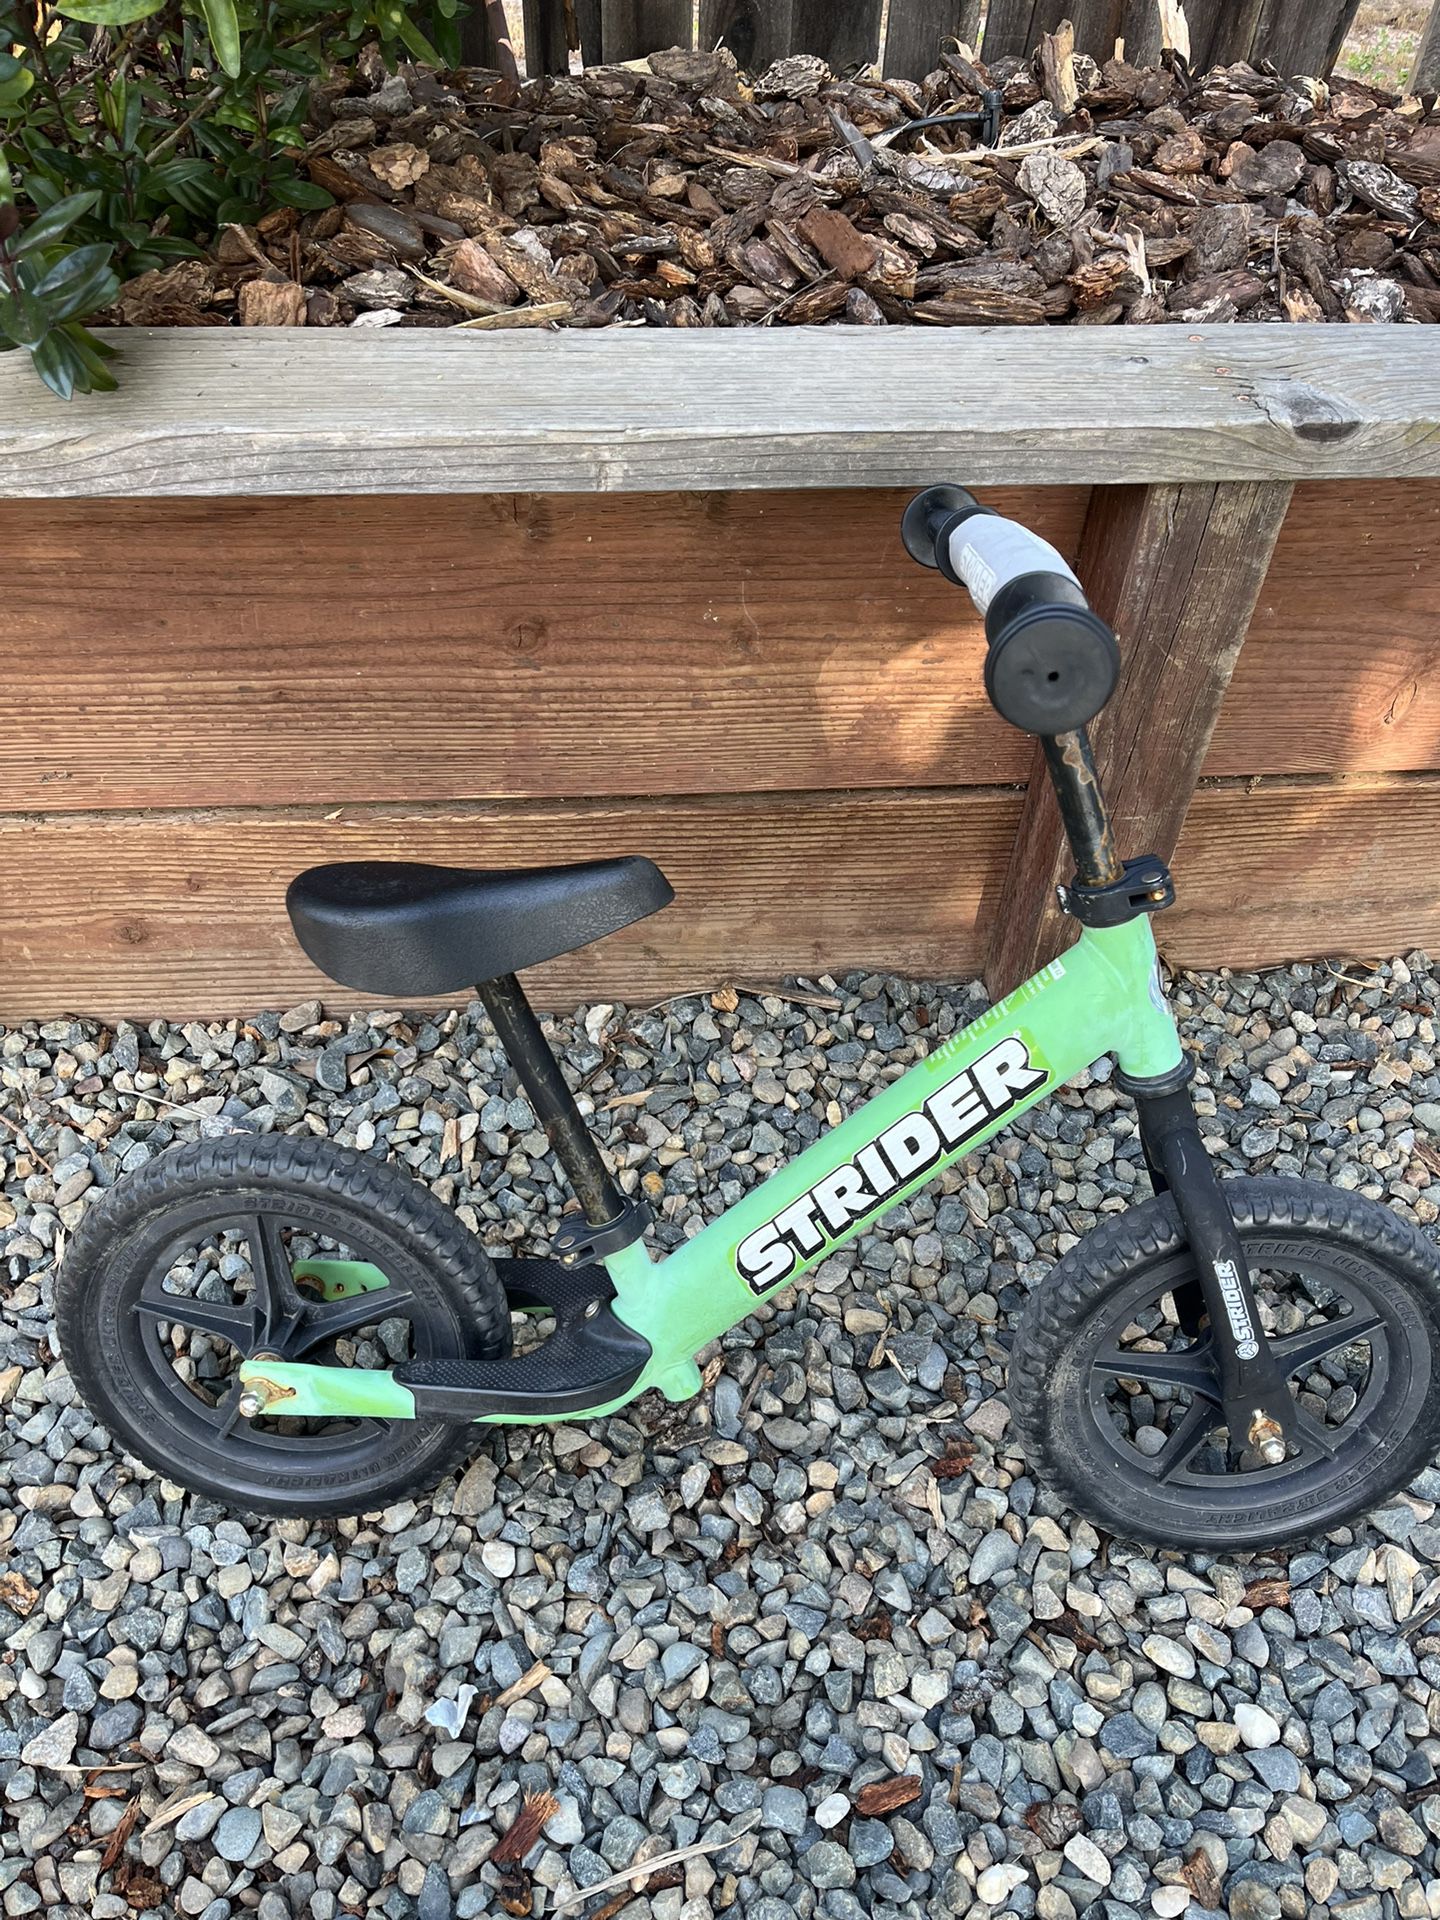 Strider 12” Balance Bike 